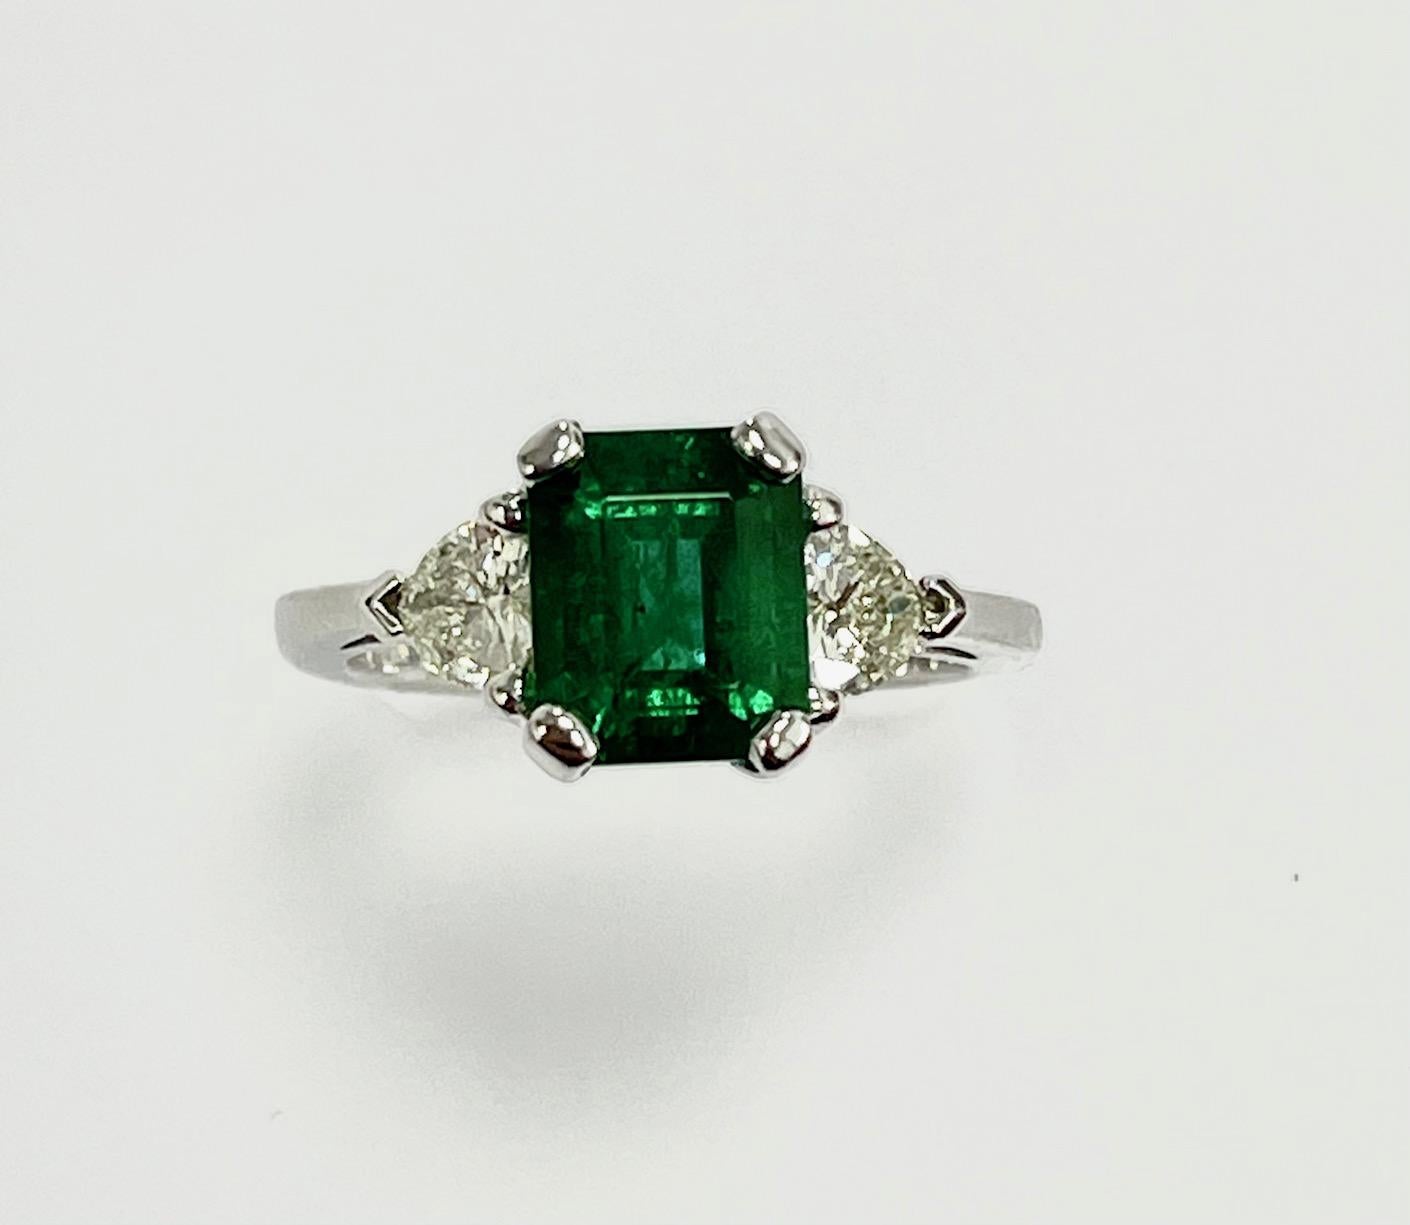 2.24 ct Zambian Emerald cut emerald      diamonds set in 18k white ring 